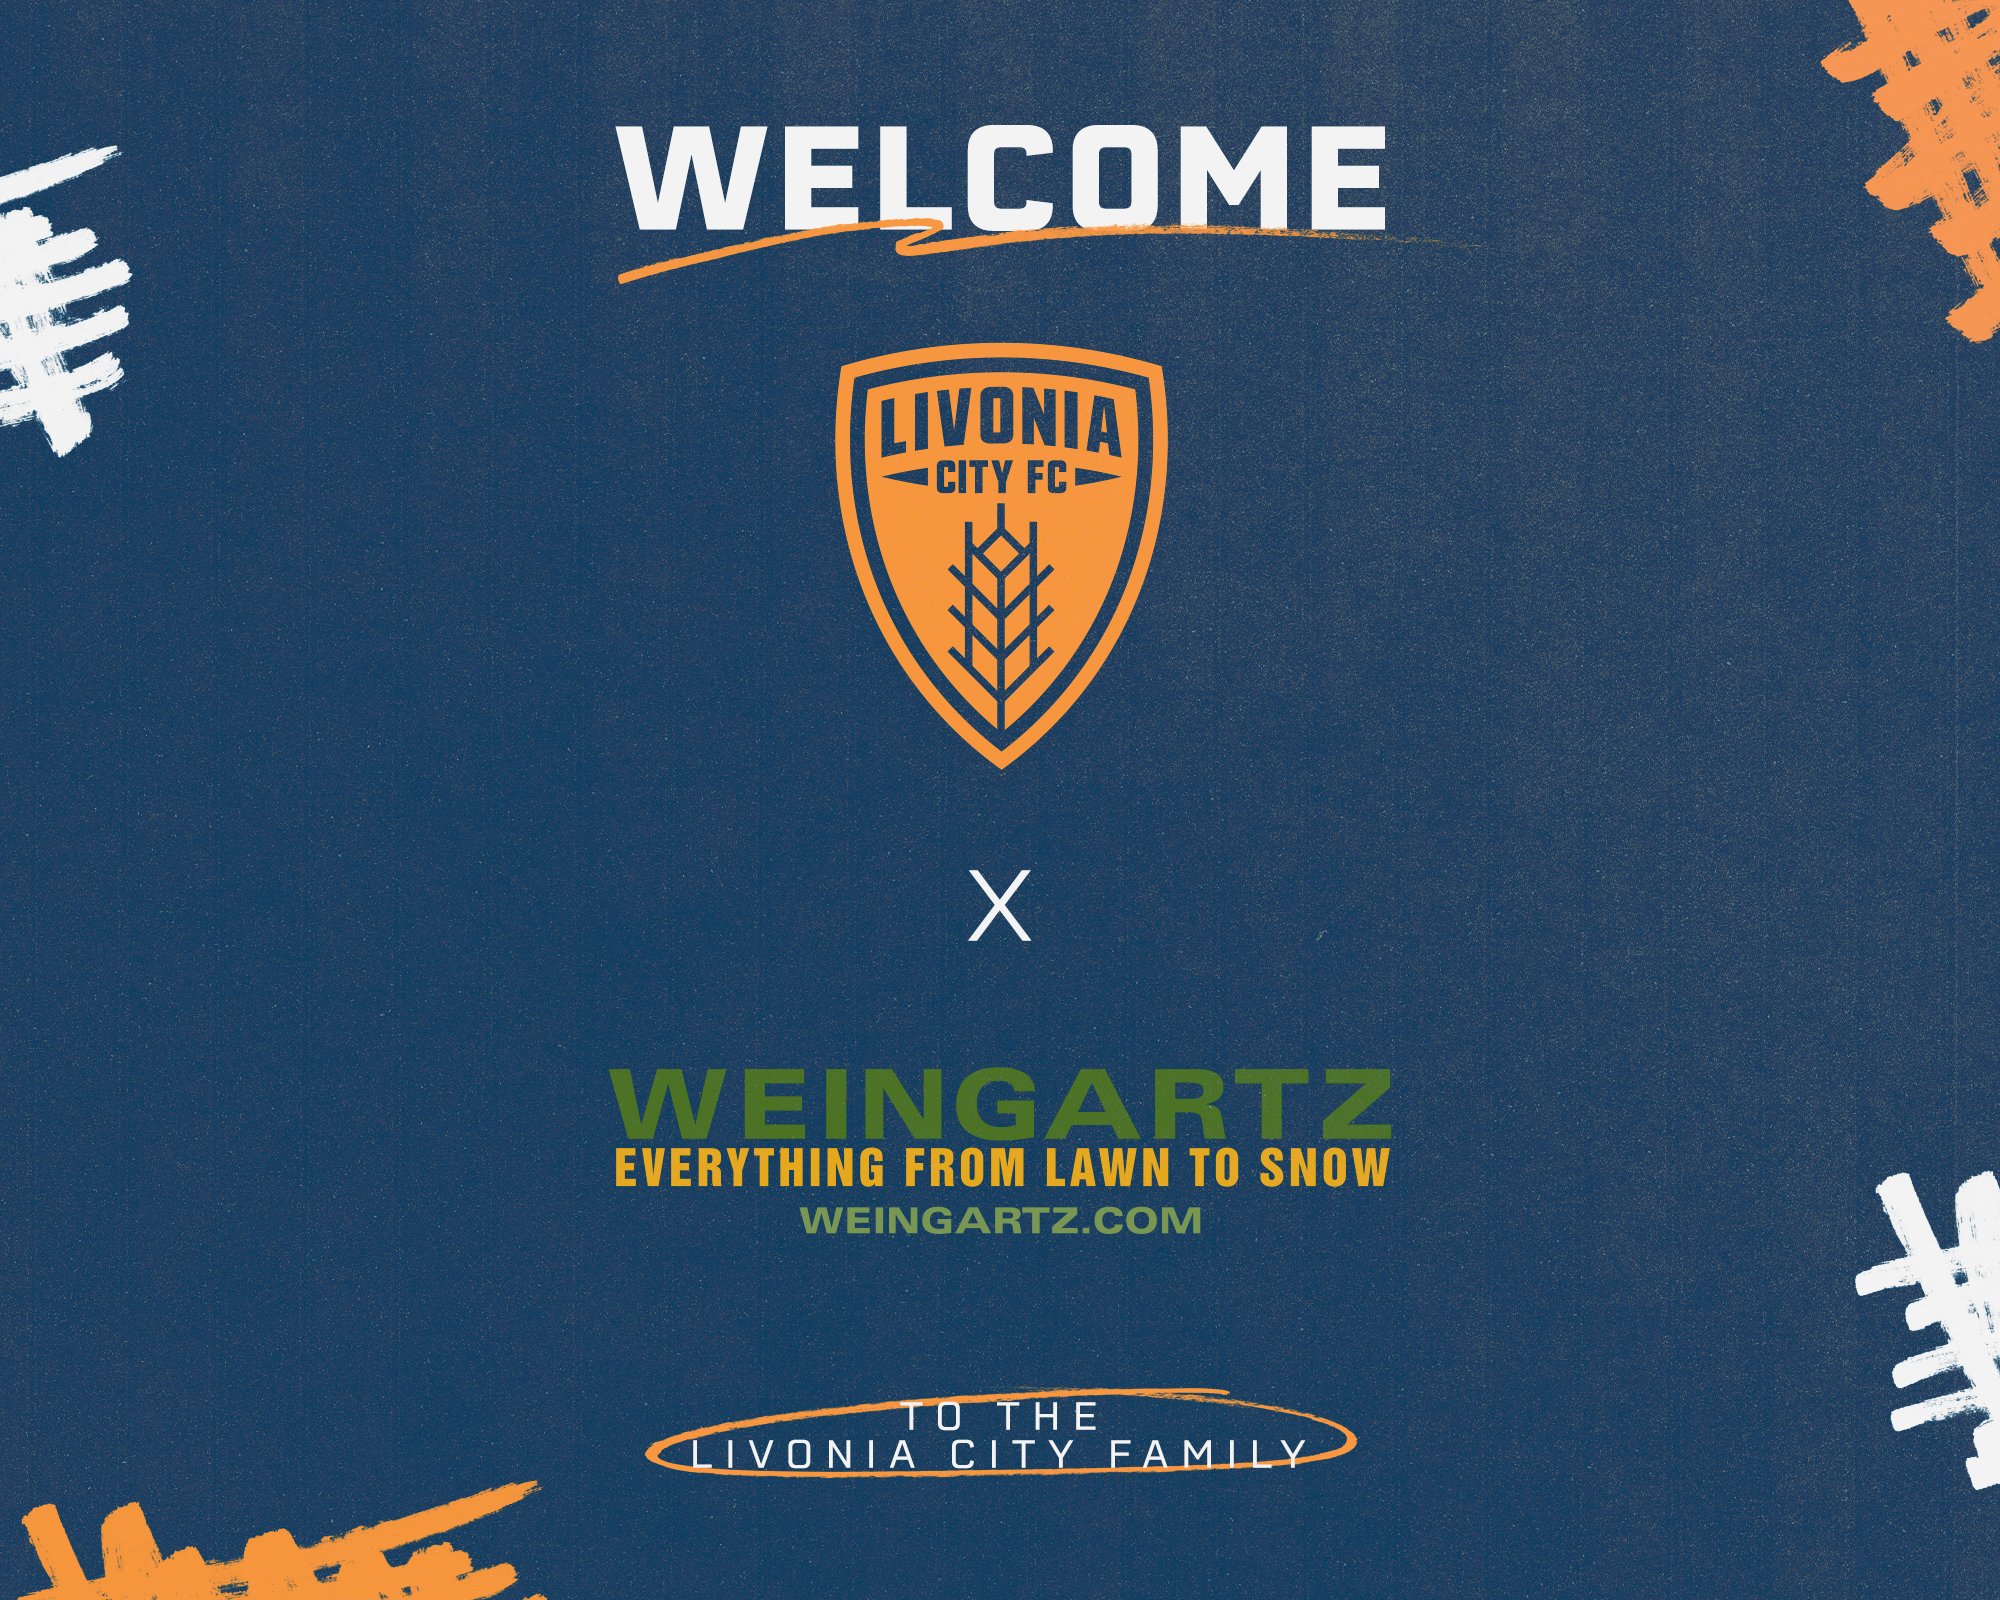 LCFC Welcomes Weingartz as Third Sponsor